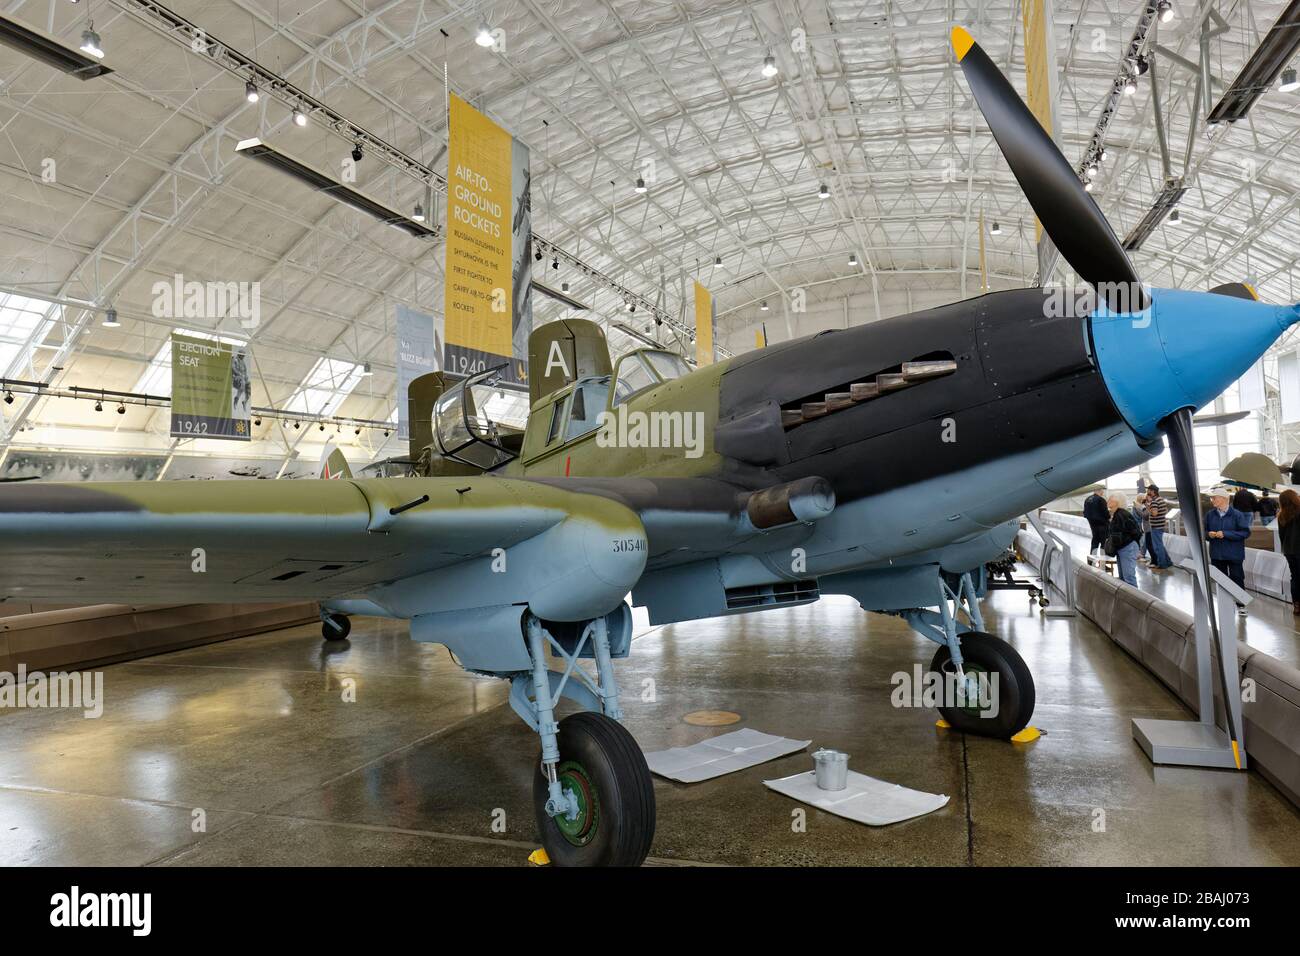 SEPTEMBER 19, 2015, EVERETT, WA: Front view of an airworthy Ilyushin II-2M3 Shturmovik on display at a Seattle-area museum. Stock Photo